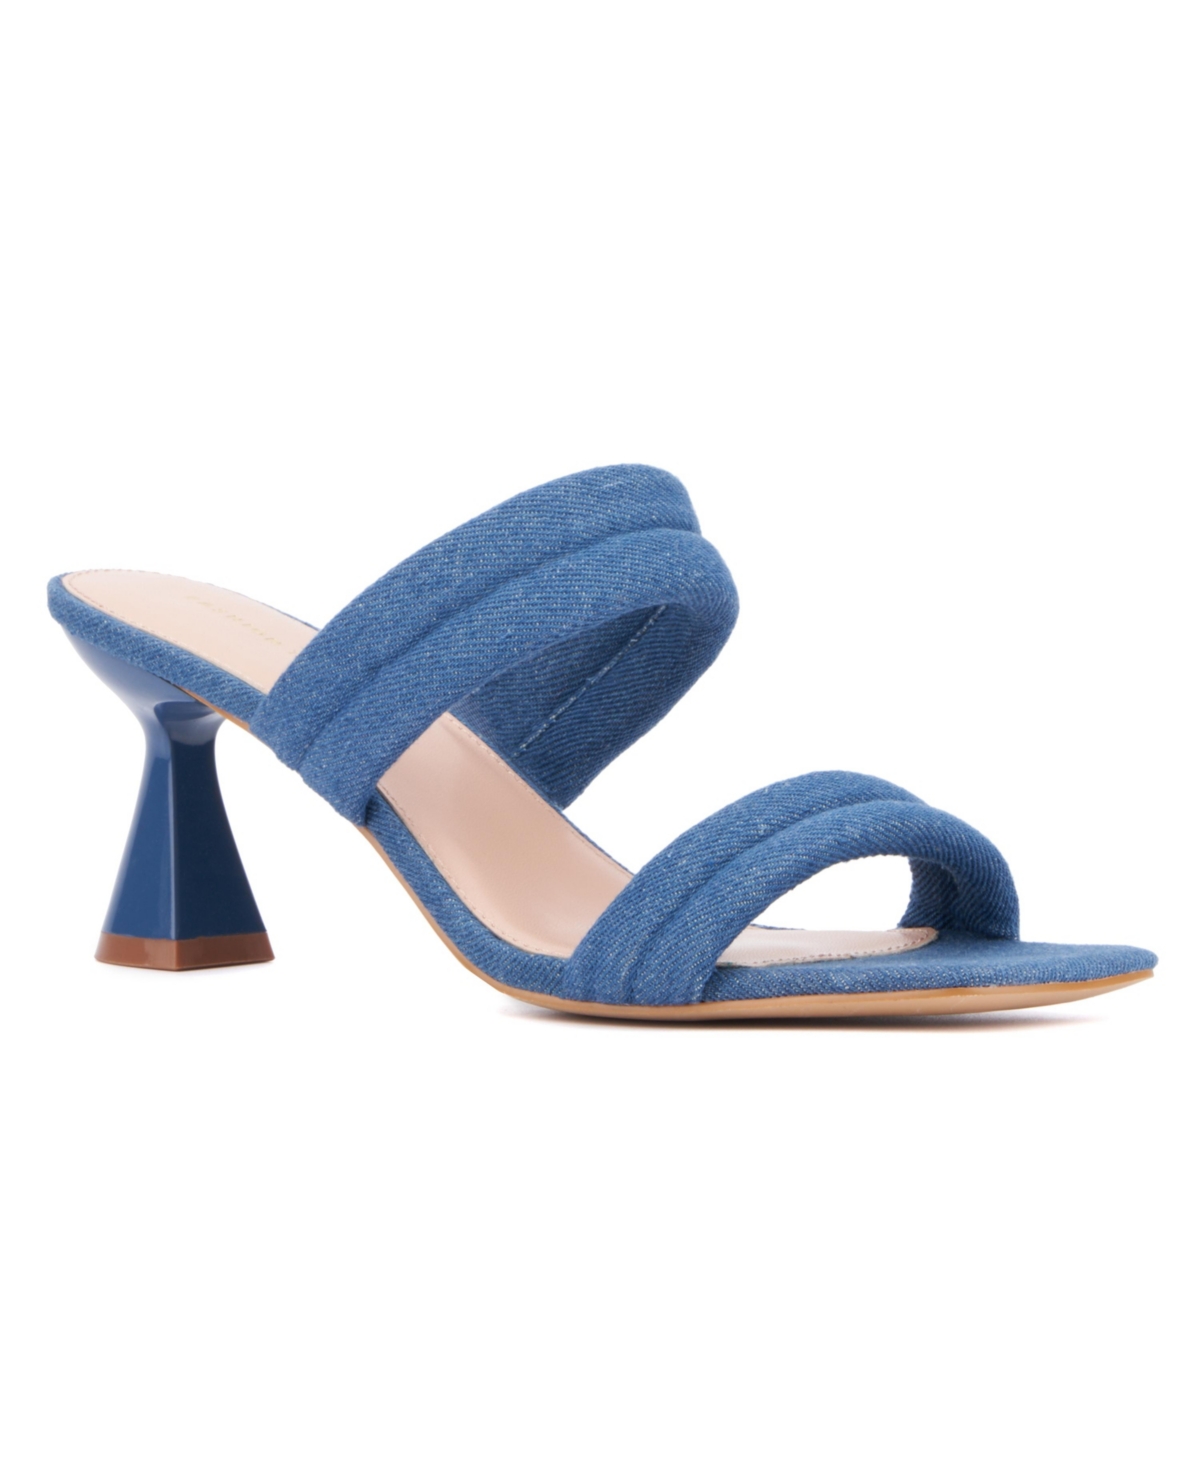 Women's Sophia Wide Width Heels sandals - Medium blue